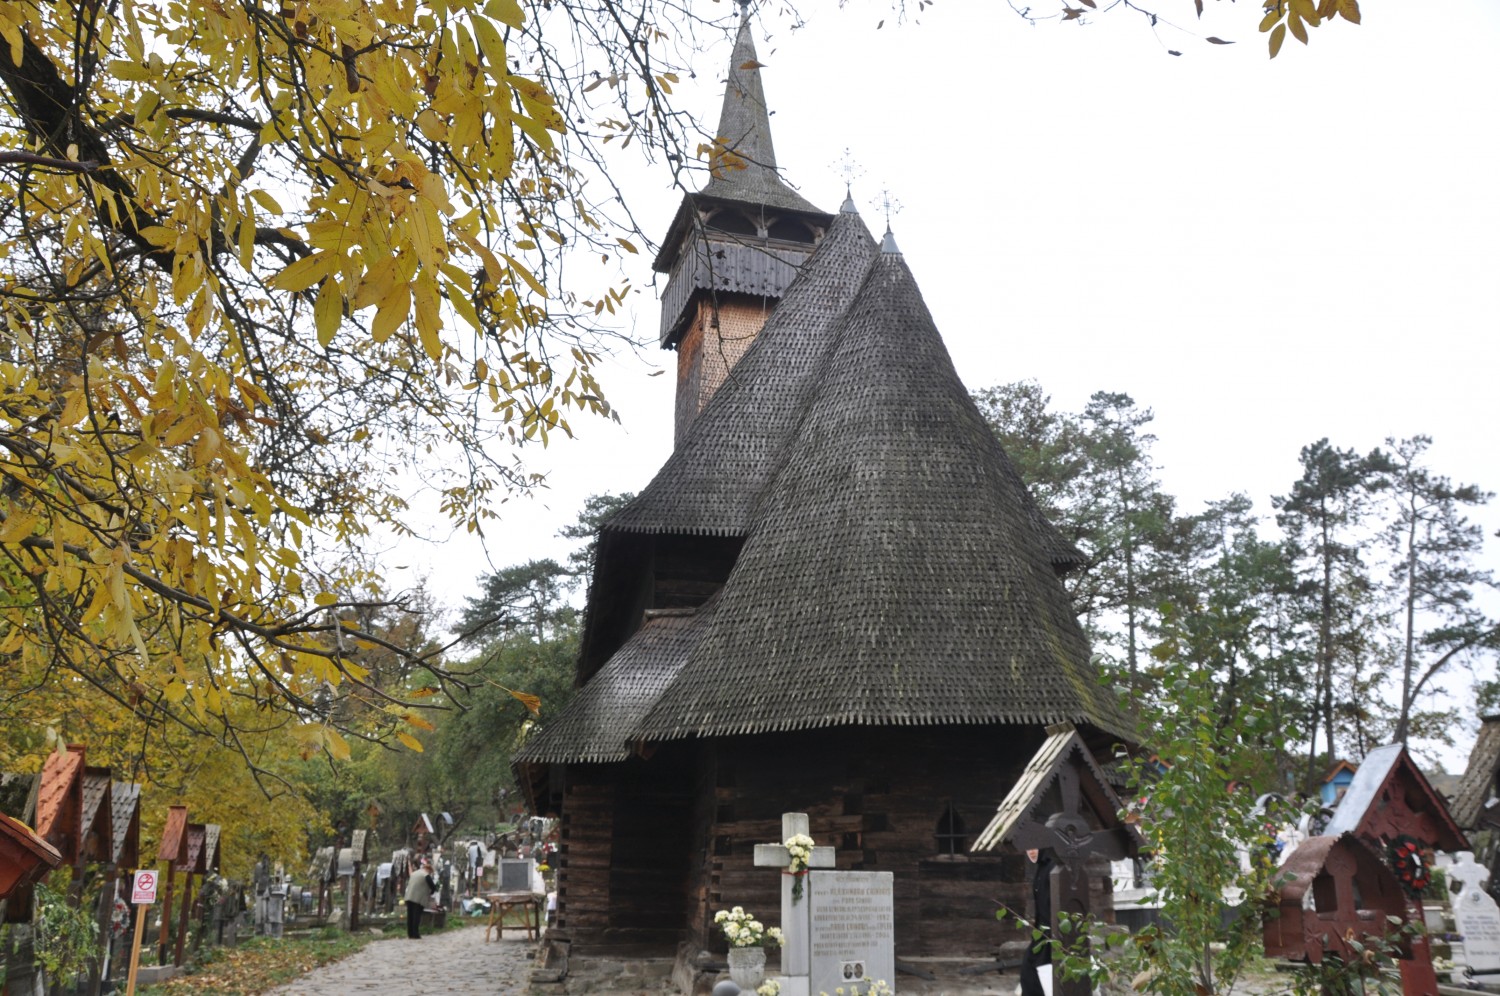 14th century wooden church